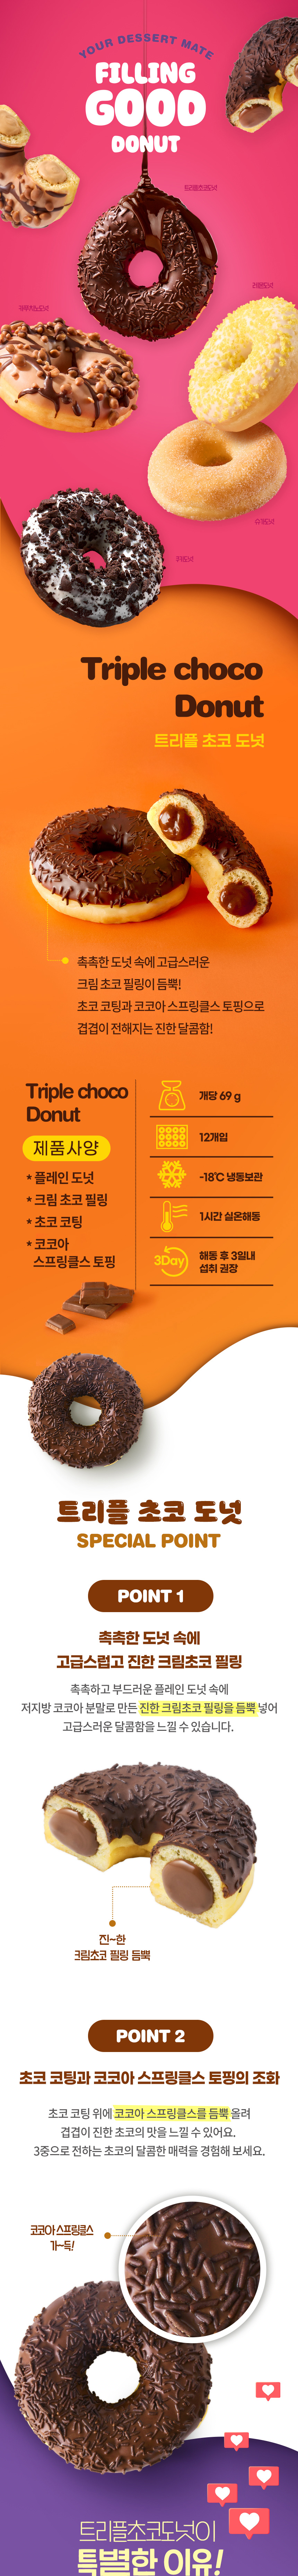 Filing_Good_Donut_Triple_choco_01